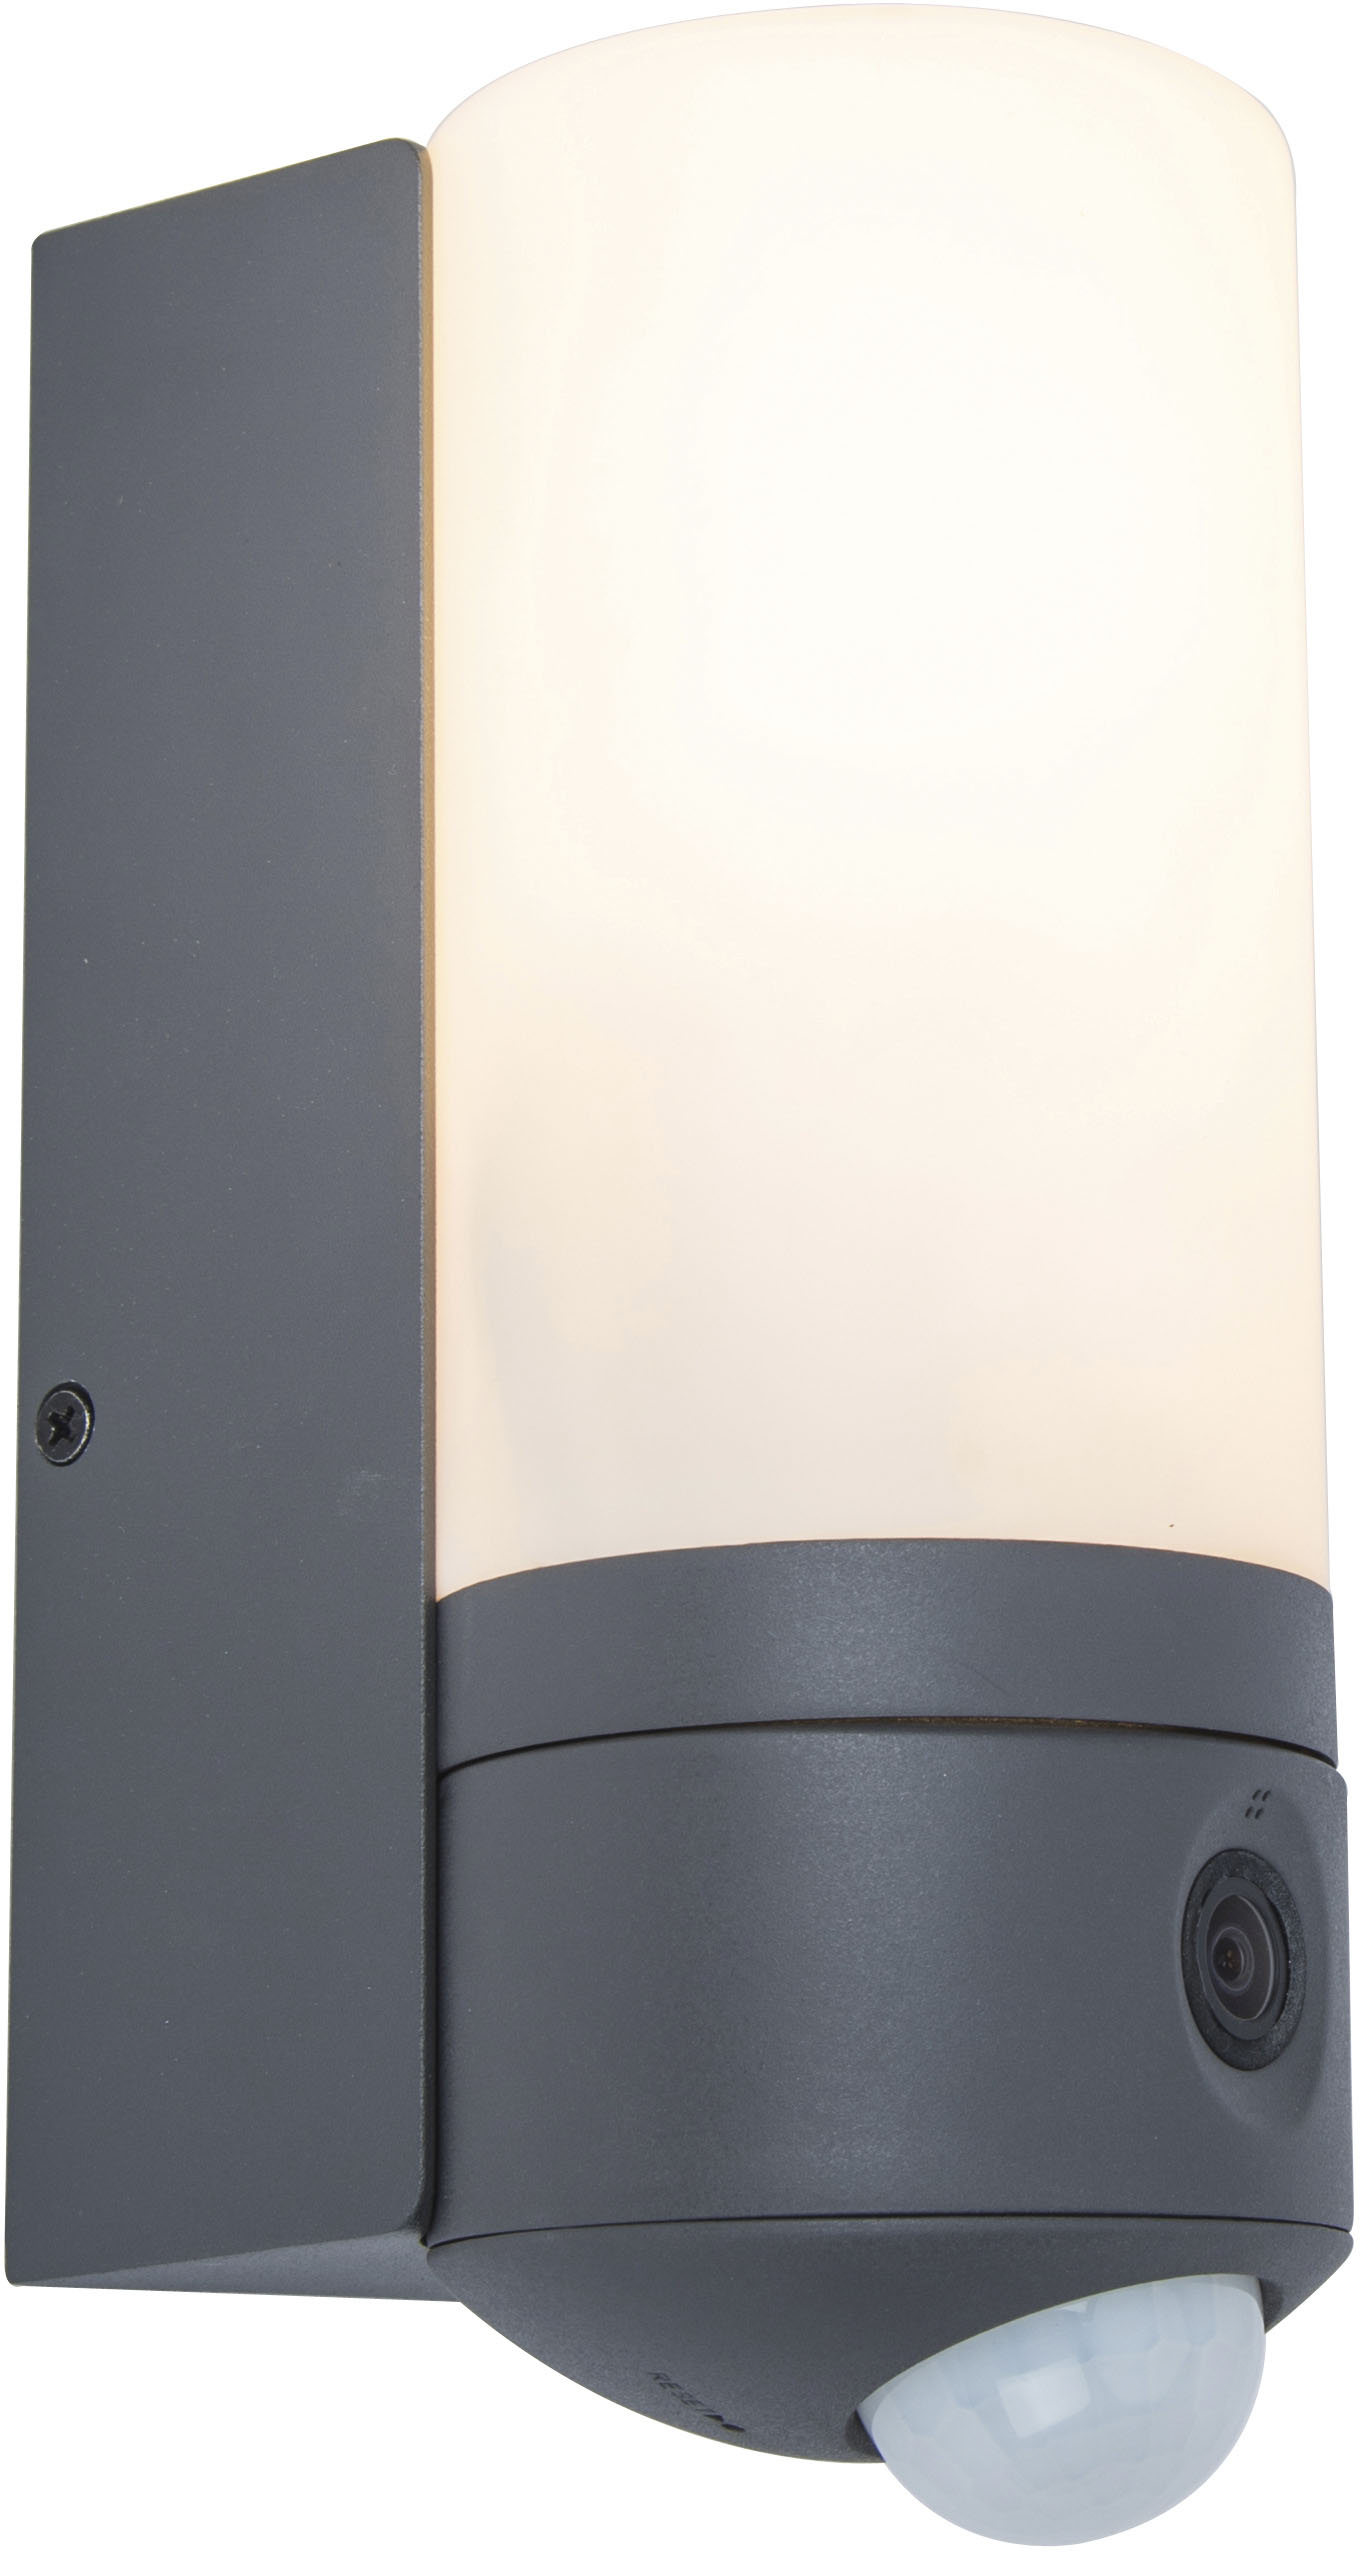 Smart-Home Rechnung LED-Leuchte LUTEC bestellen »DROPA«, auf Smarte